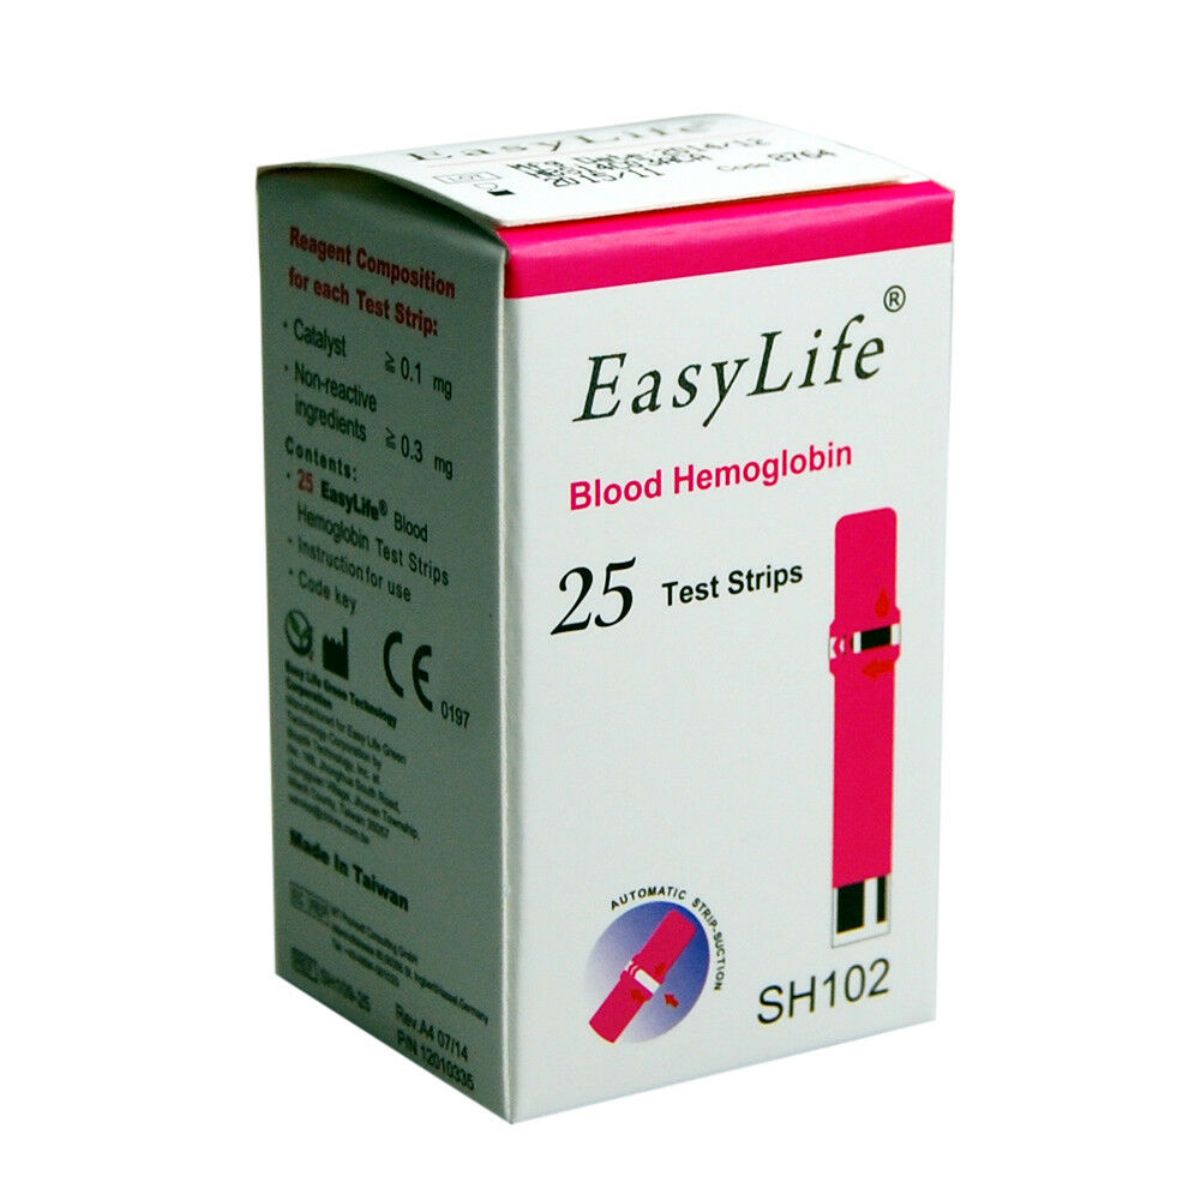 Easy Life Blood Hemoglobin 25 Test Strips